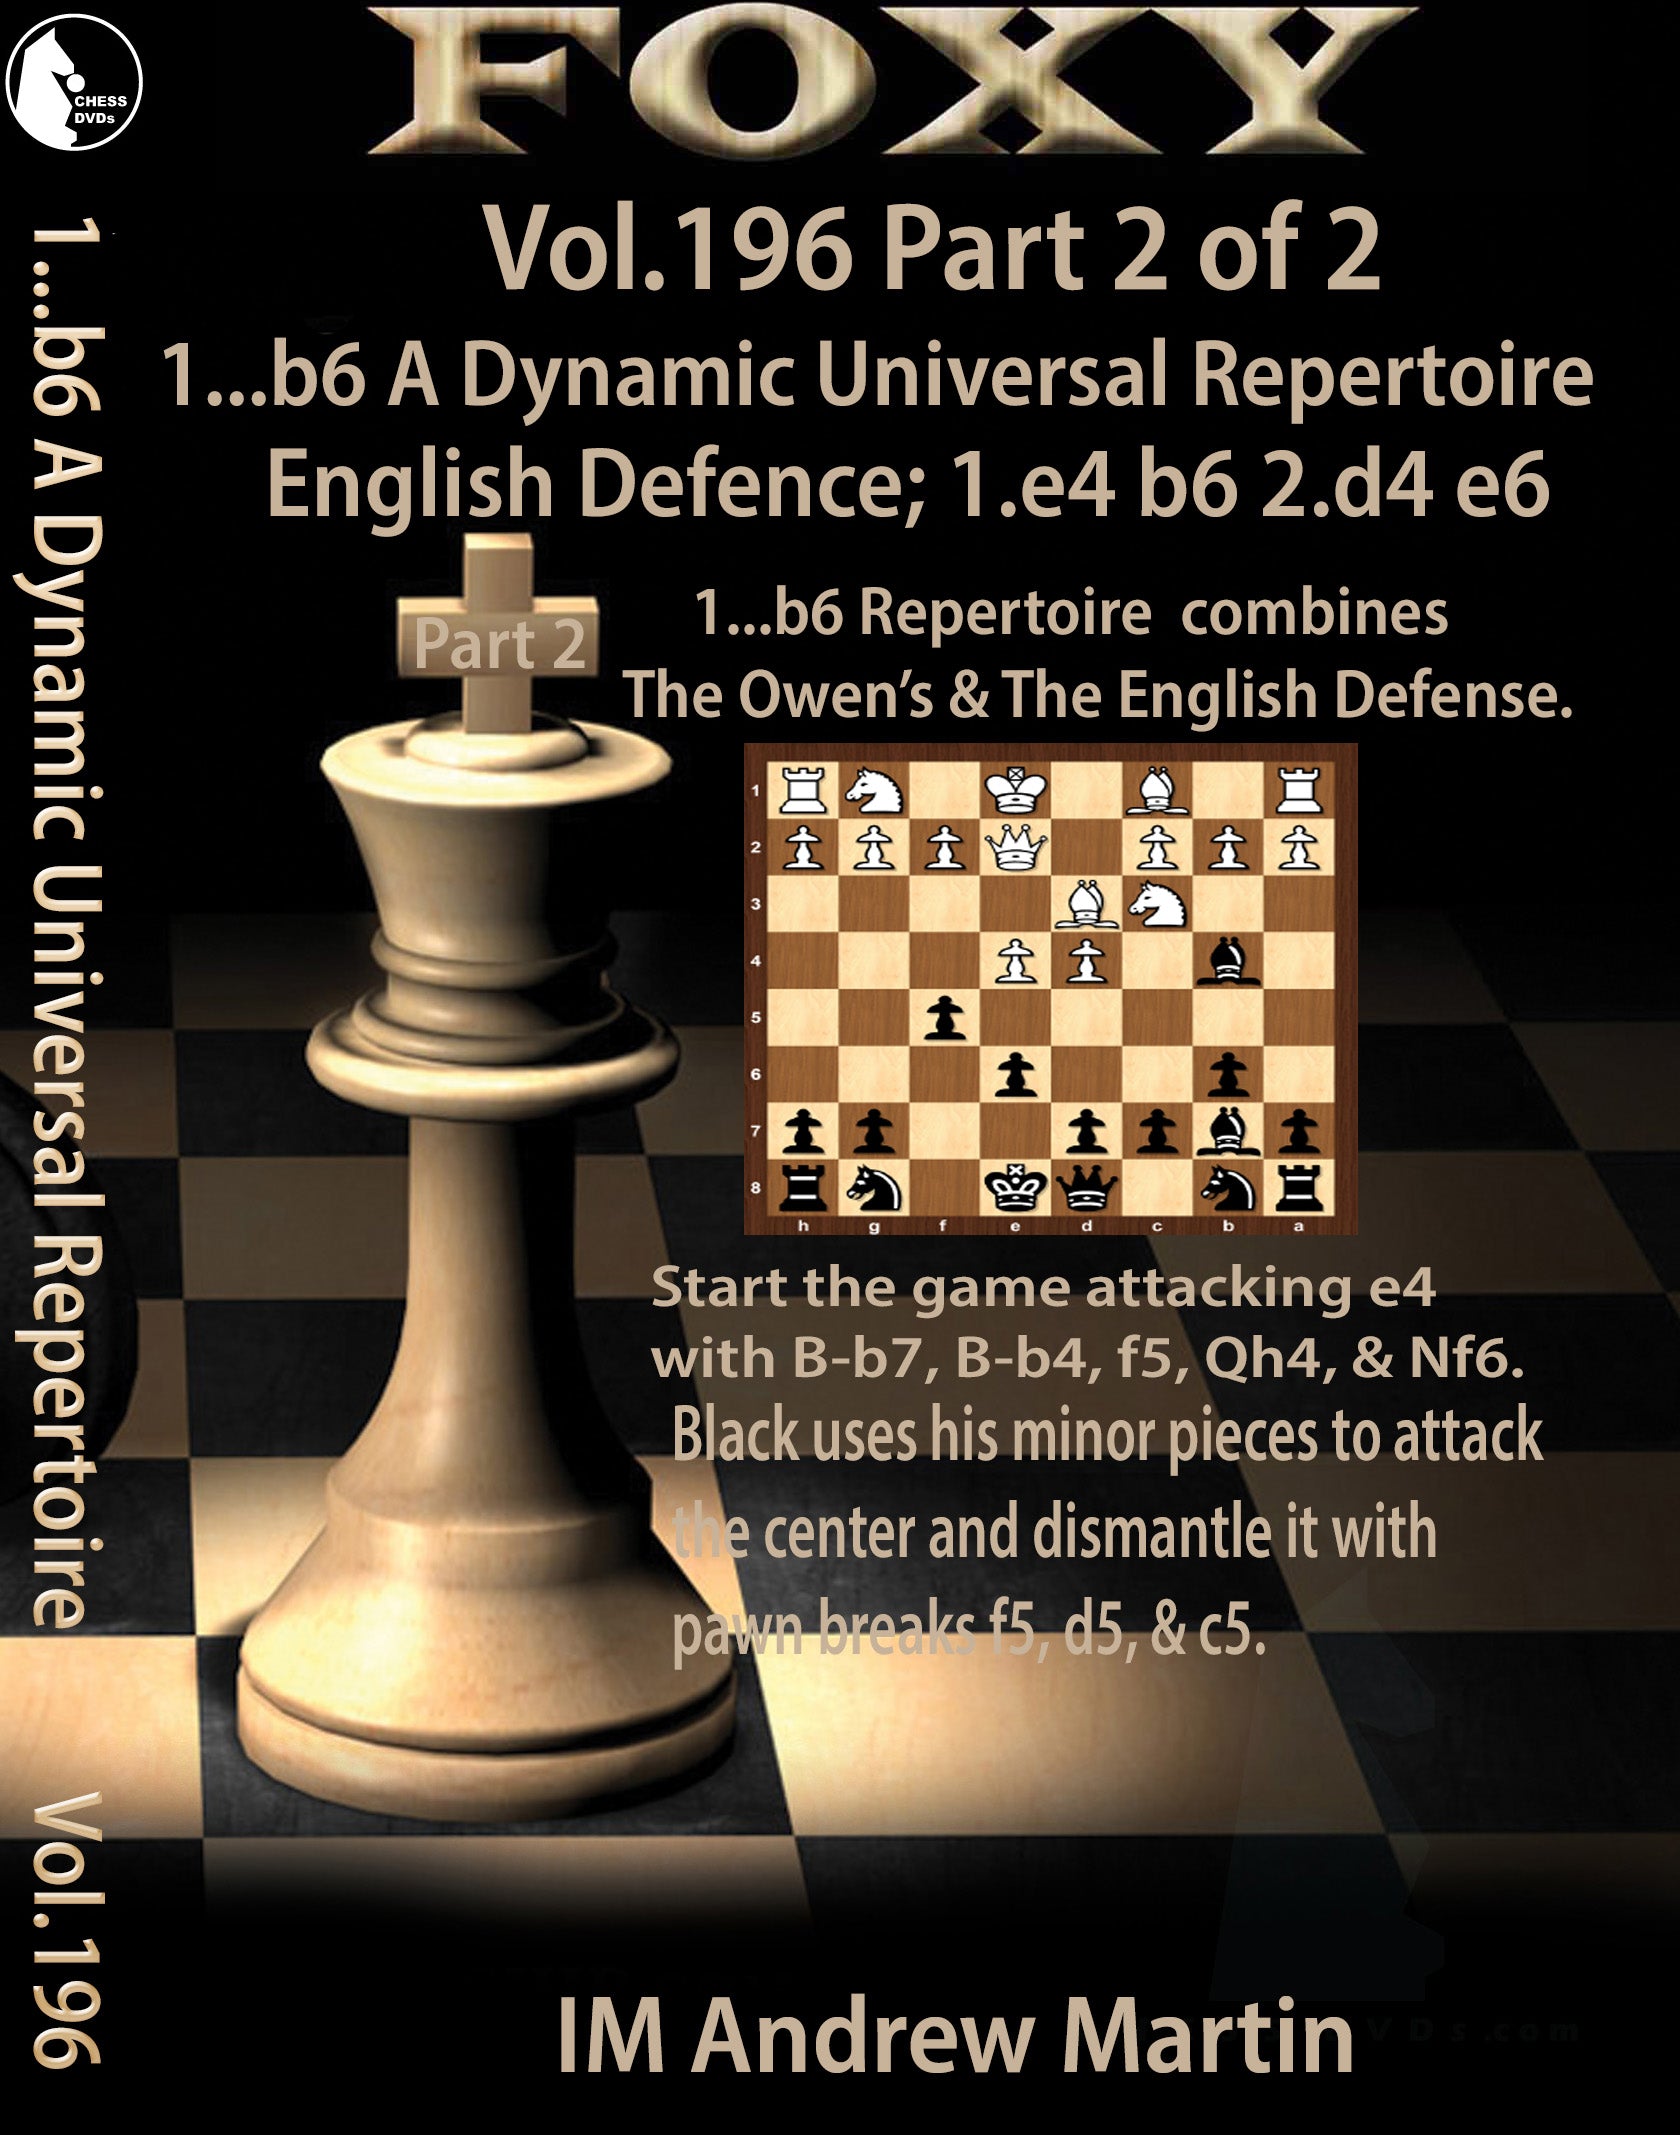 Foxy Vol. 126 Part 3 Pirc Defense - The Classical